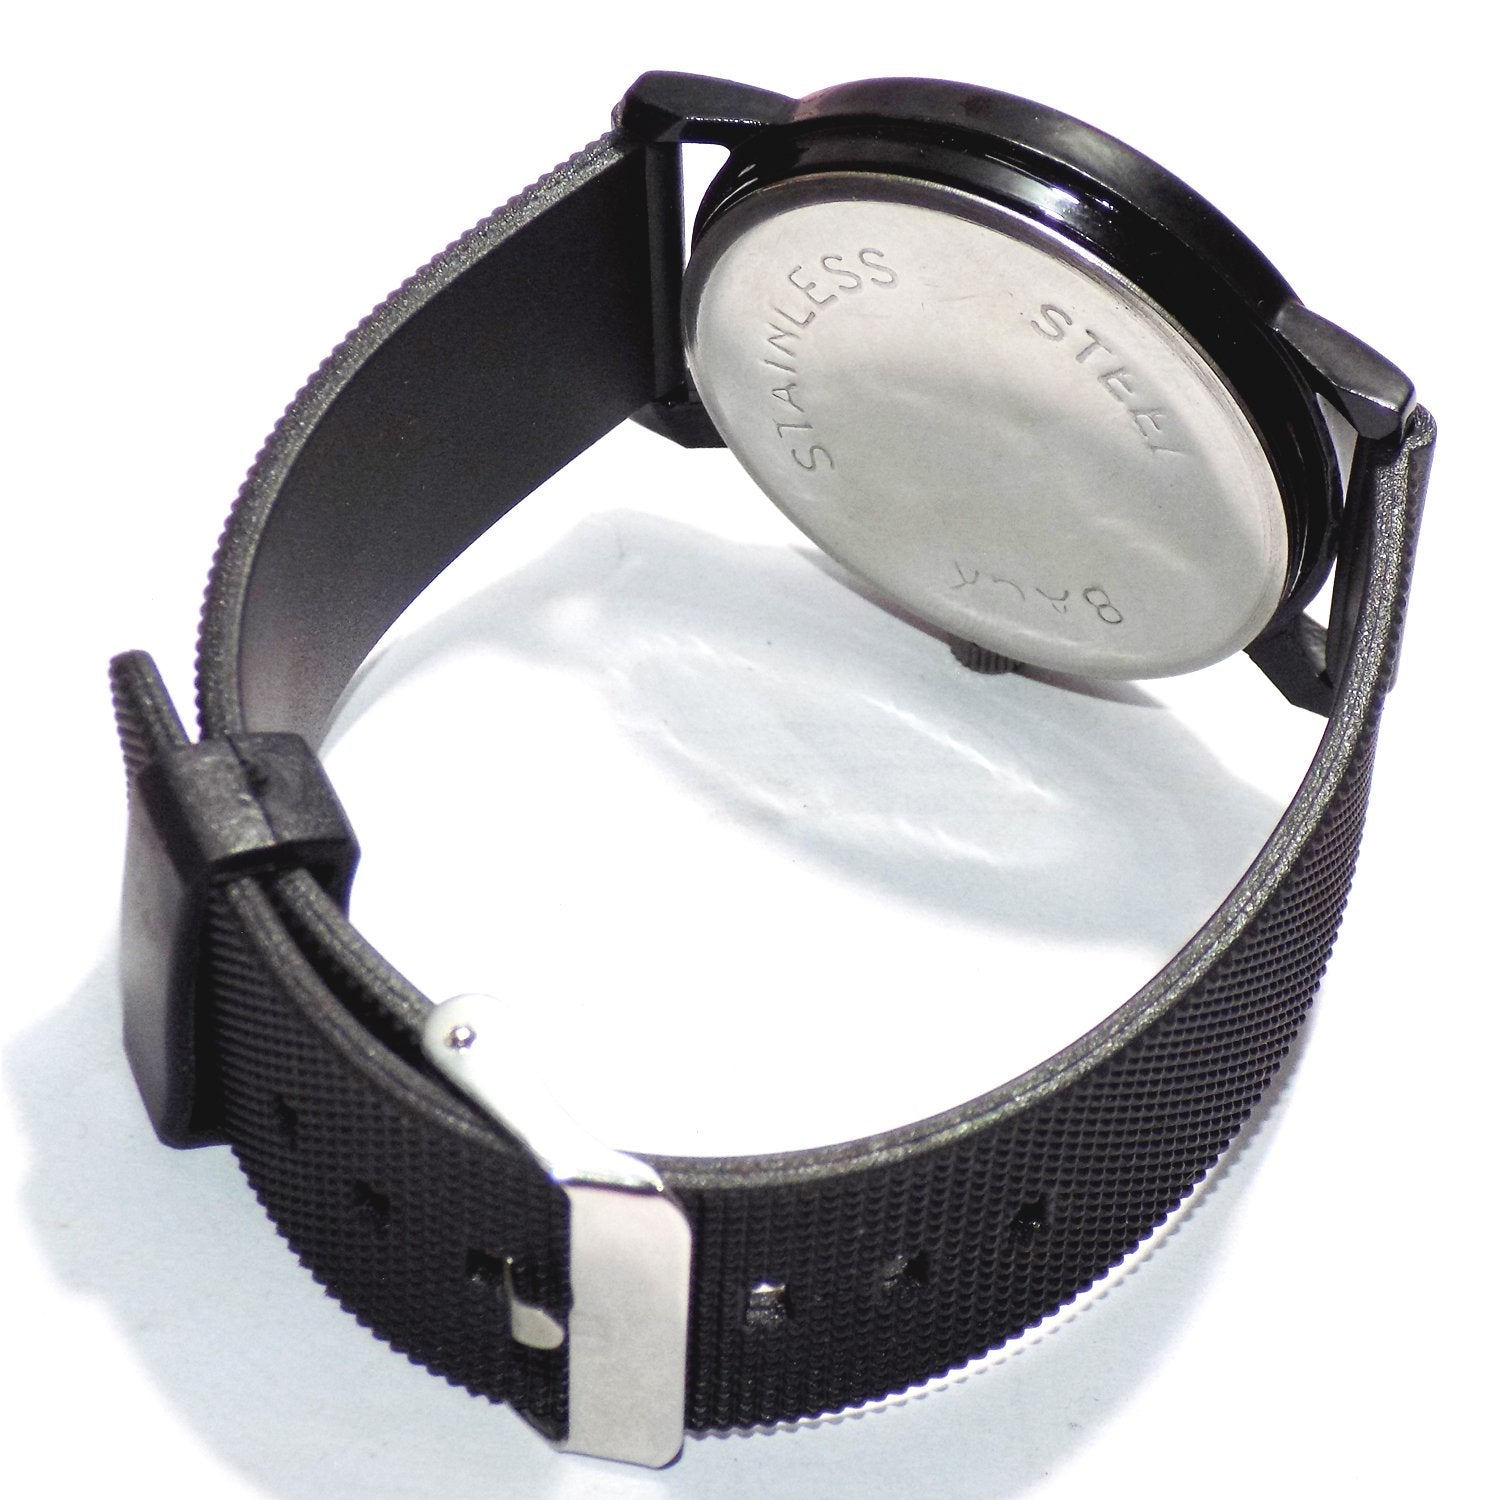 1817 Unique & Premium Analogue Stylish Watch With Silicon Wrist Band - SkyShopy